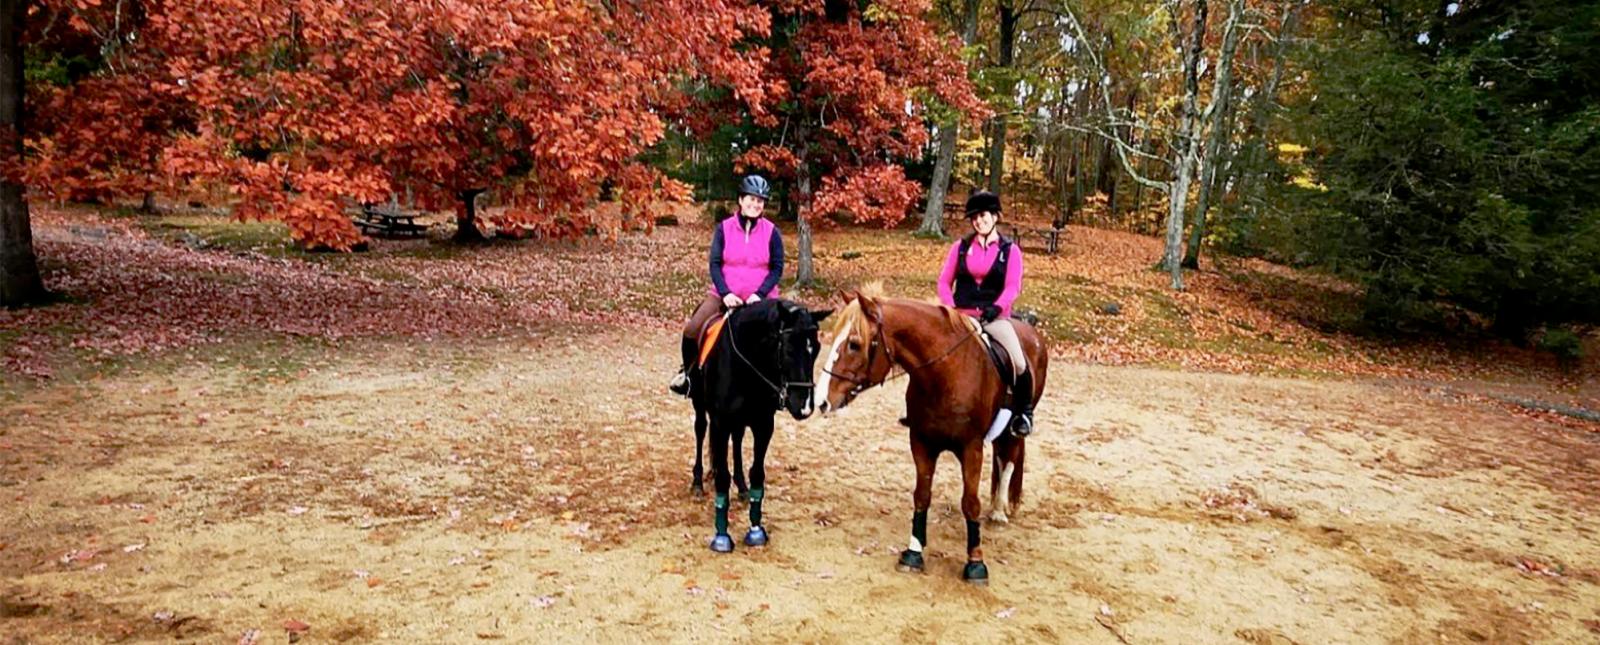 Two women horseback riding in the fall (Instagram@daniellaa81)